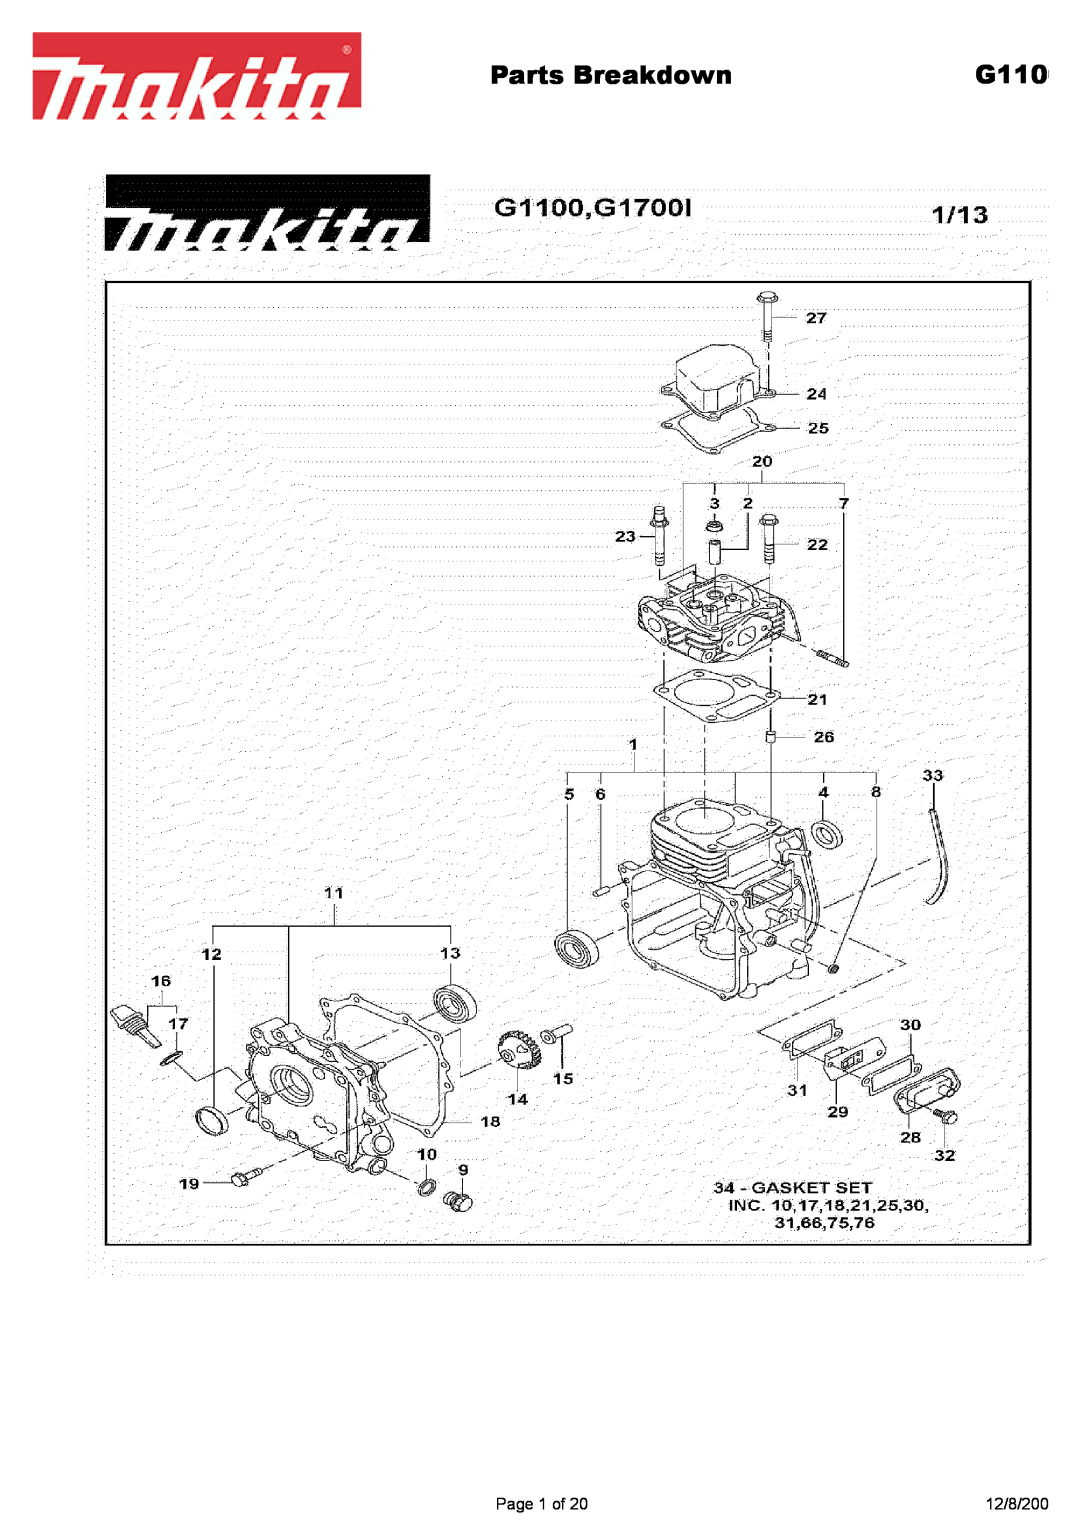 Makita G1700i manual Model, 3ZZ9990147, Generator 